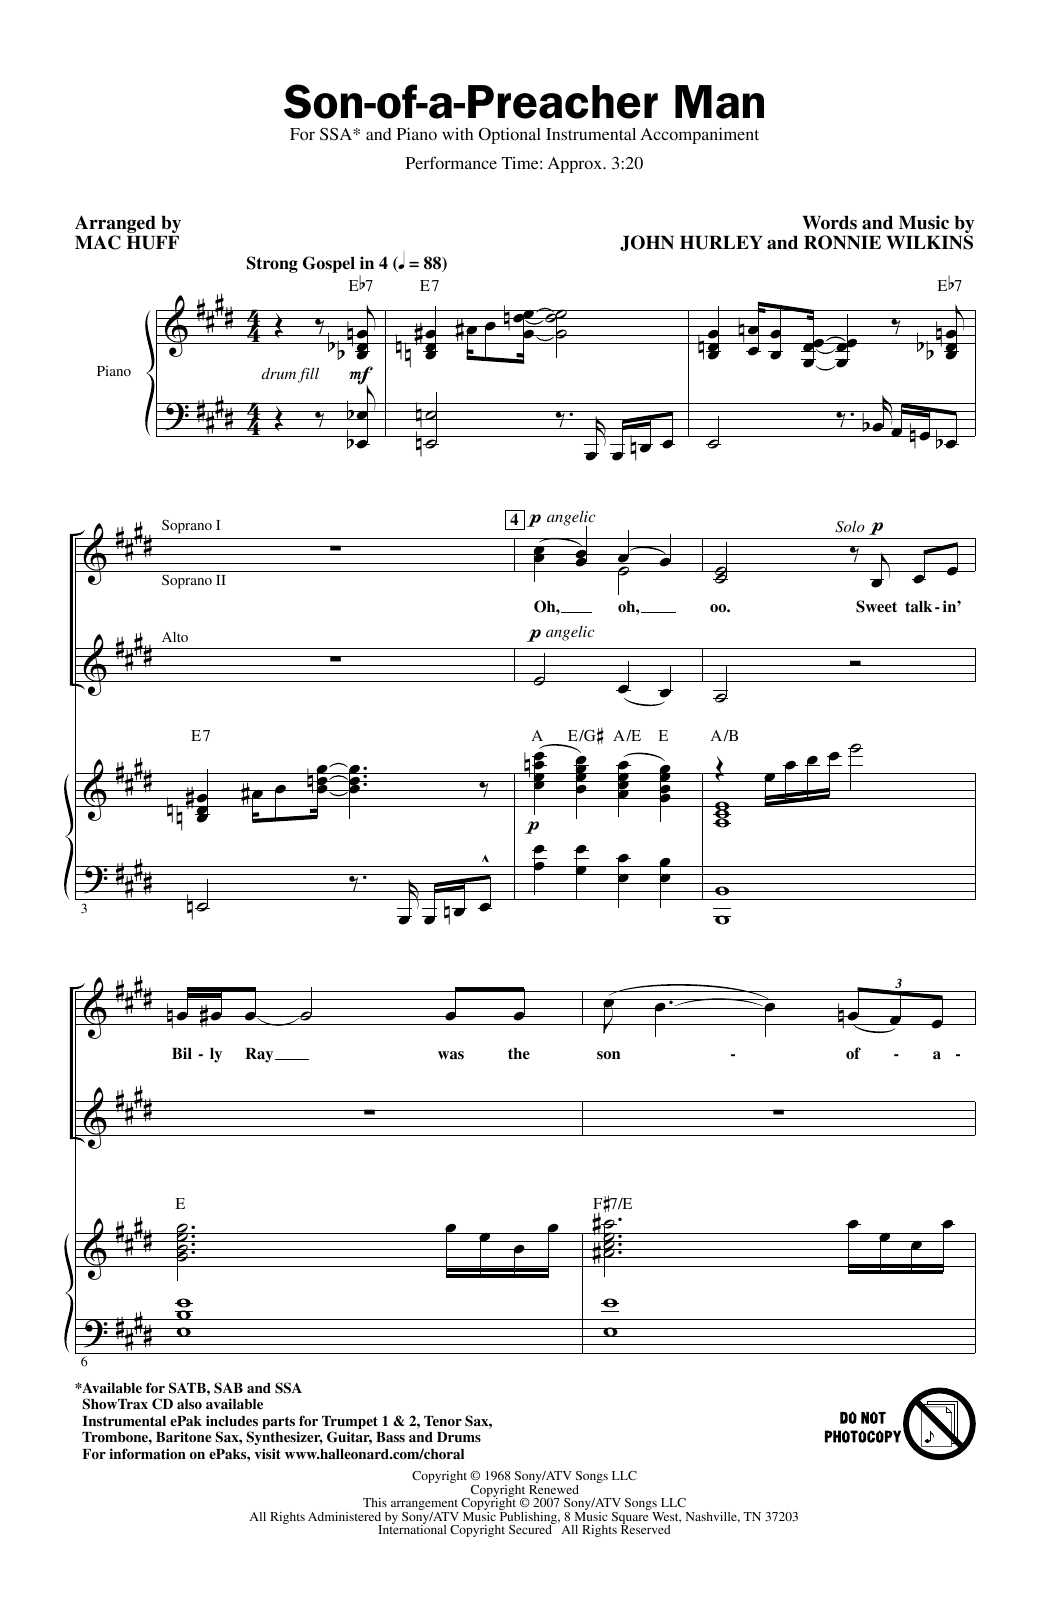 Dusty Springfield Son-Of-A-Preacher Man (arr. Mac Huff) Sheet Music Notes & Chords for SAB Choir - Download or Print PDF